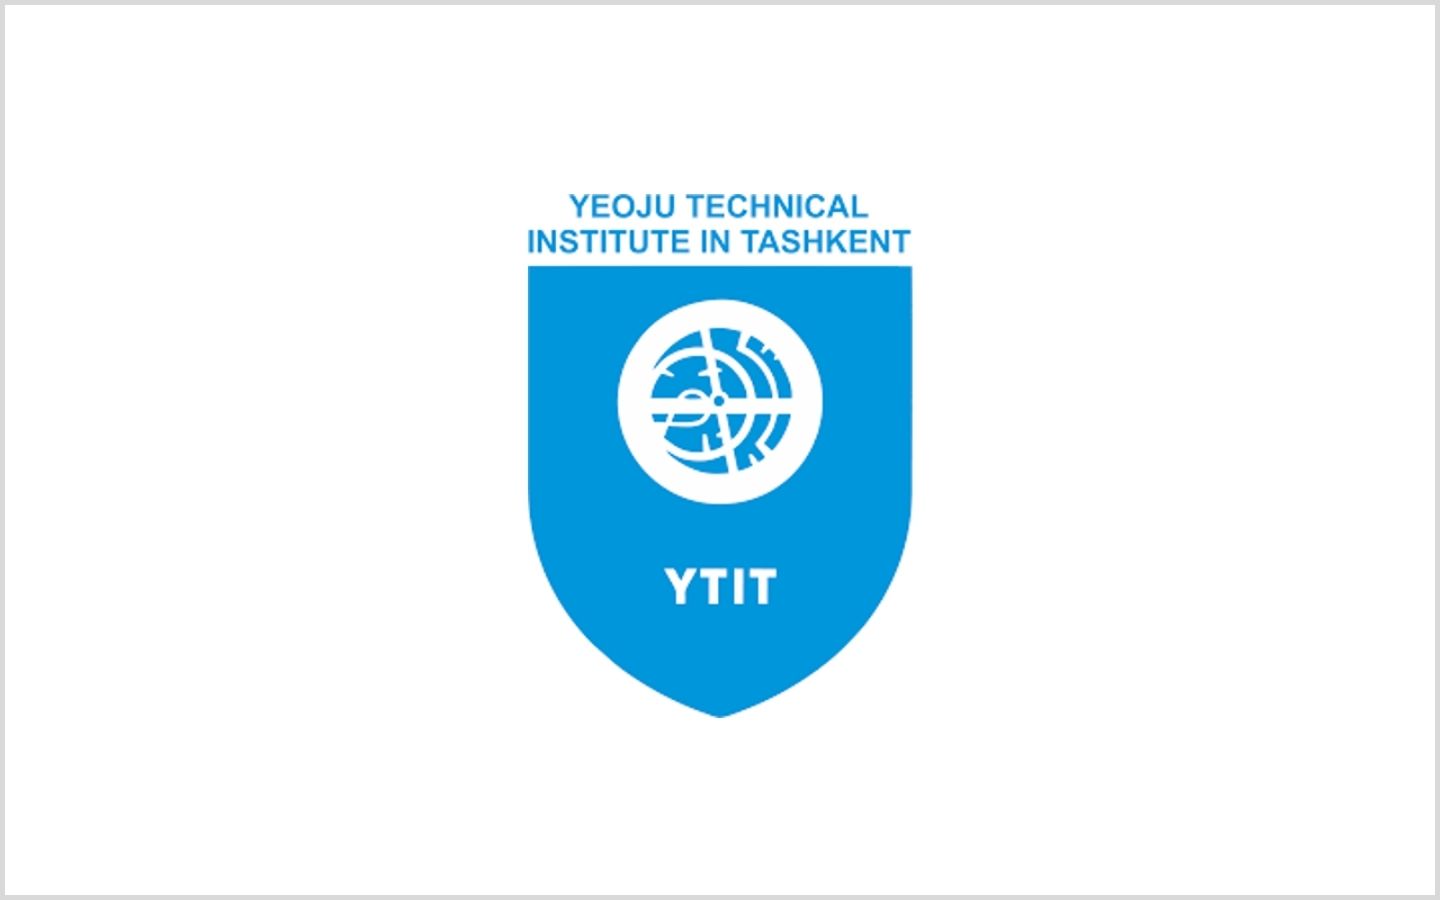 Yeoju Technical Institute in Tashkent Logo 